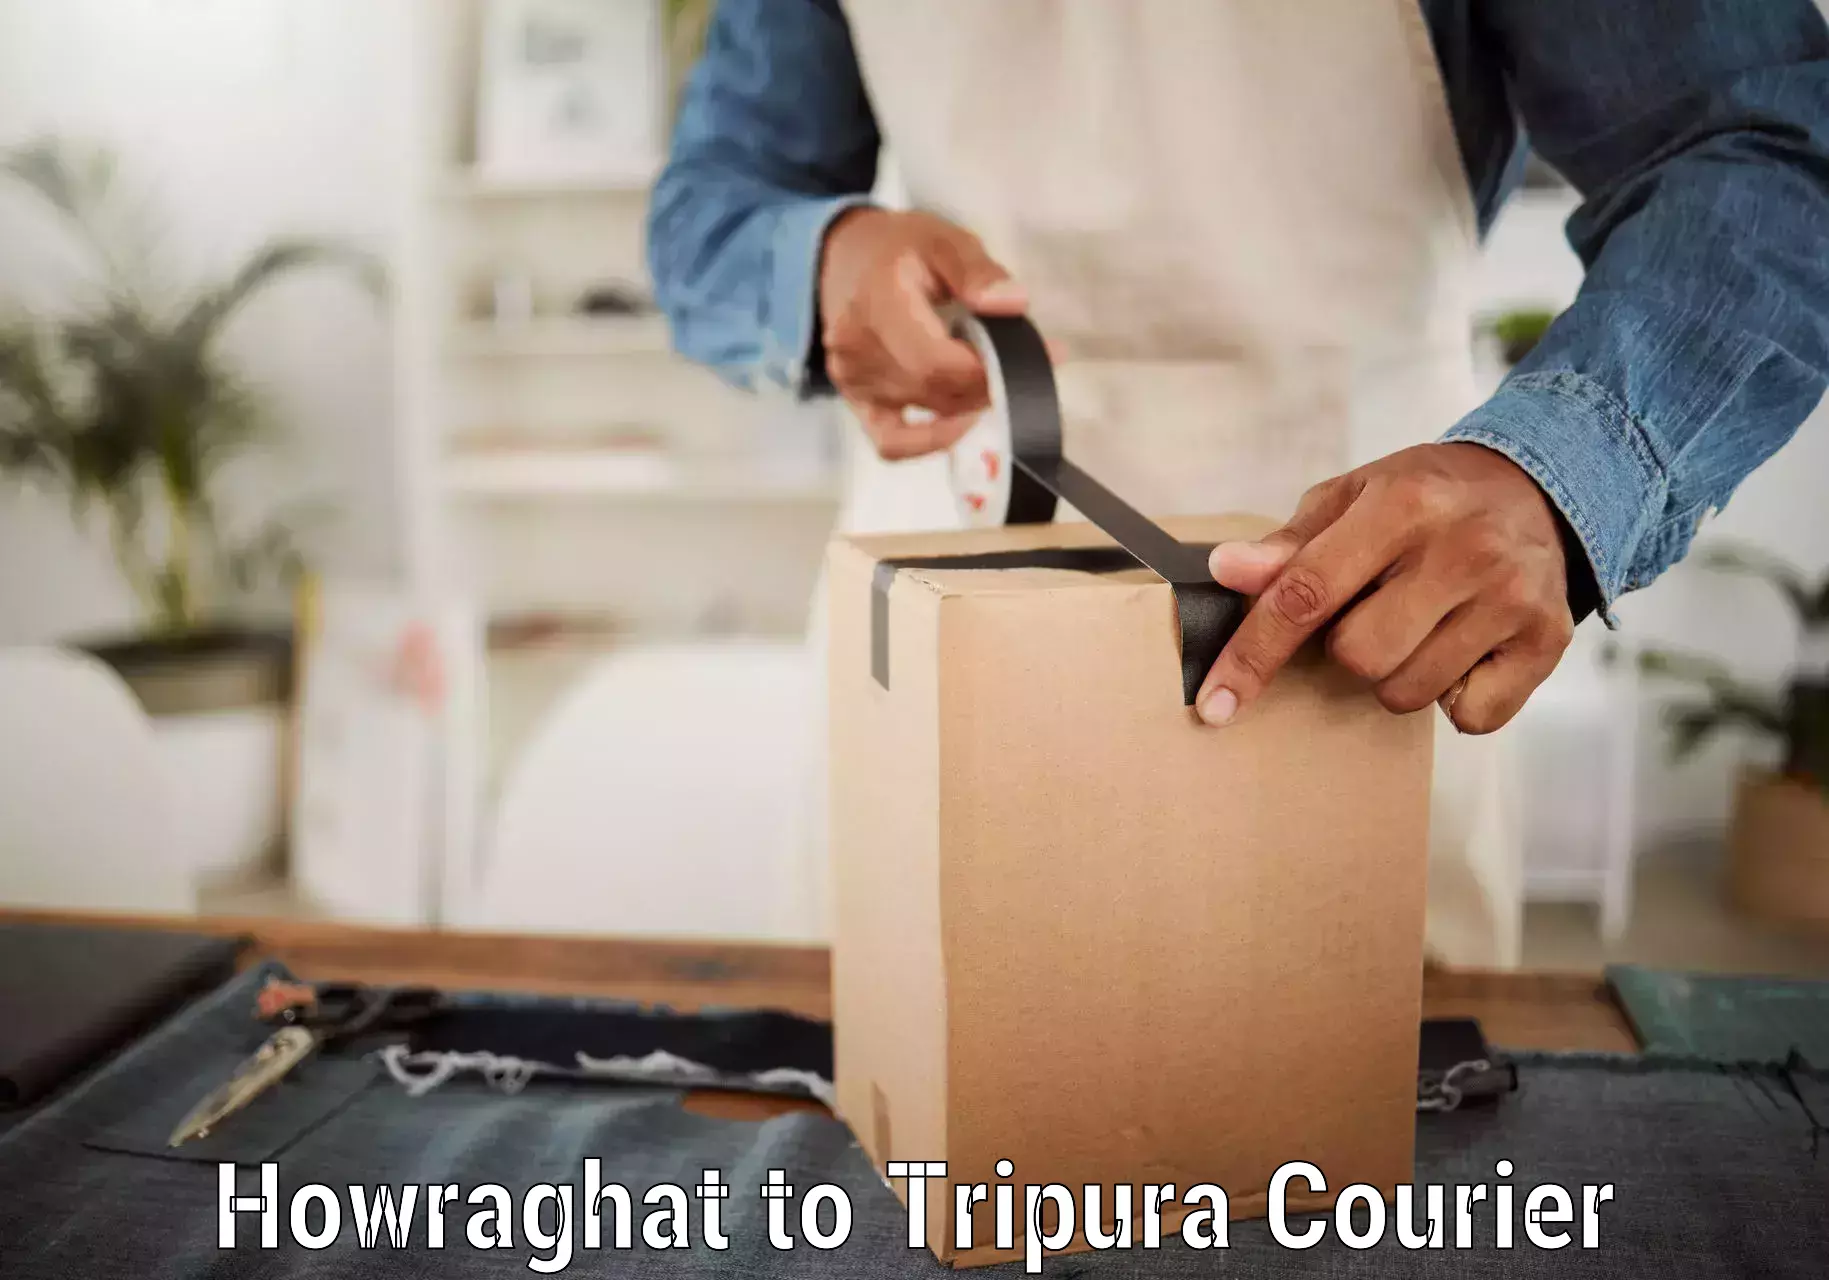 Local courier options Howraghat to IIIT Agartala